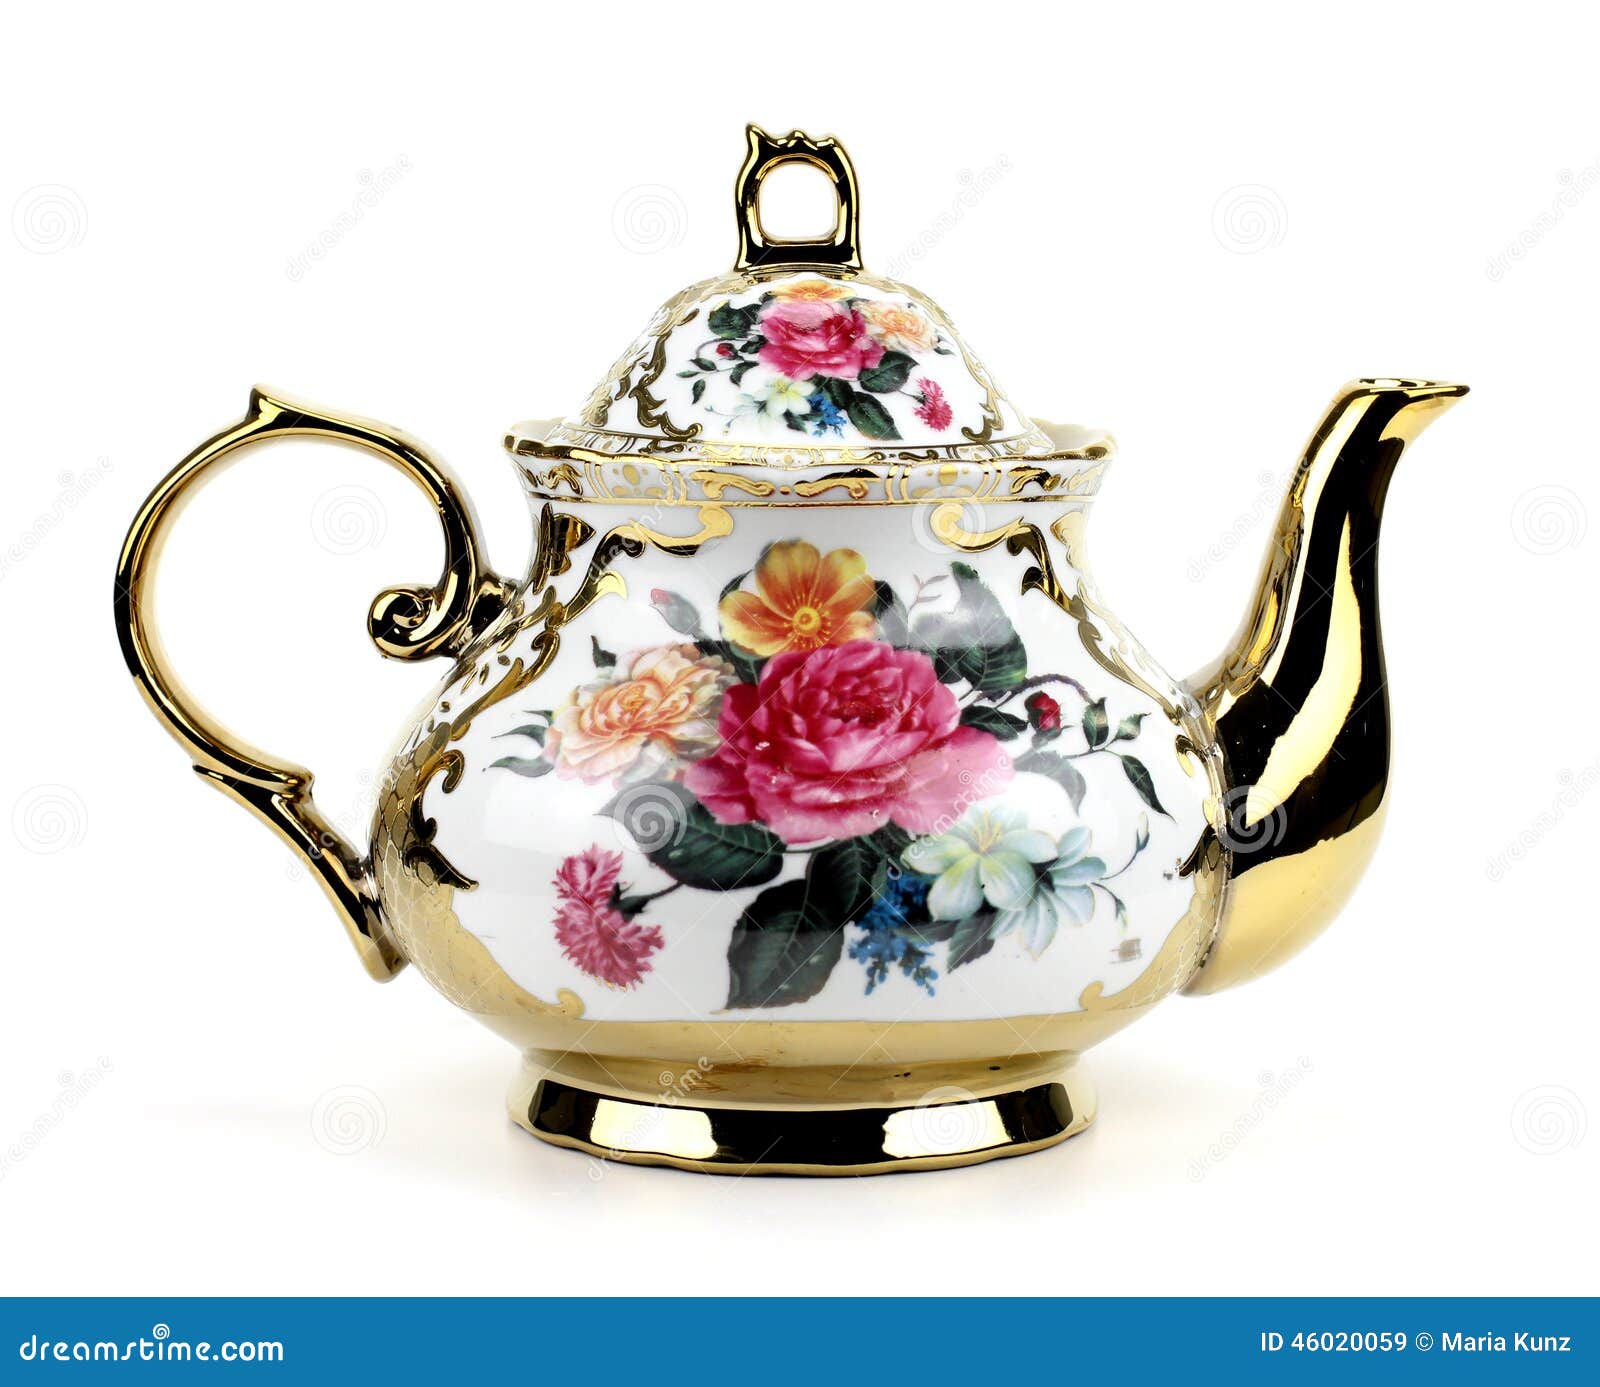 china teapot  on white background